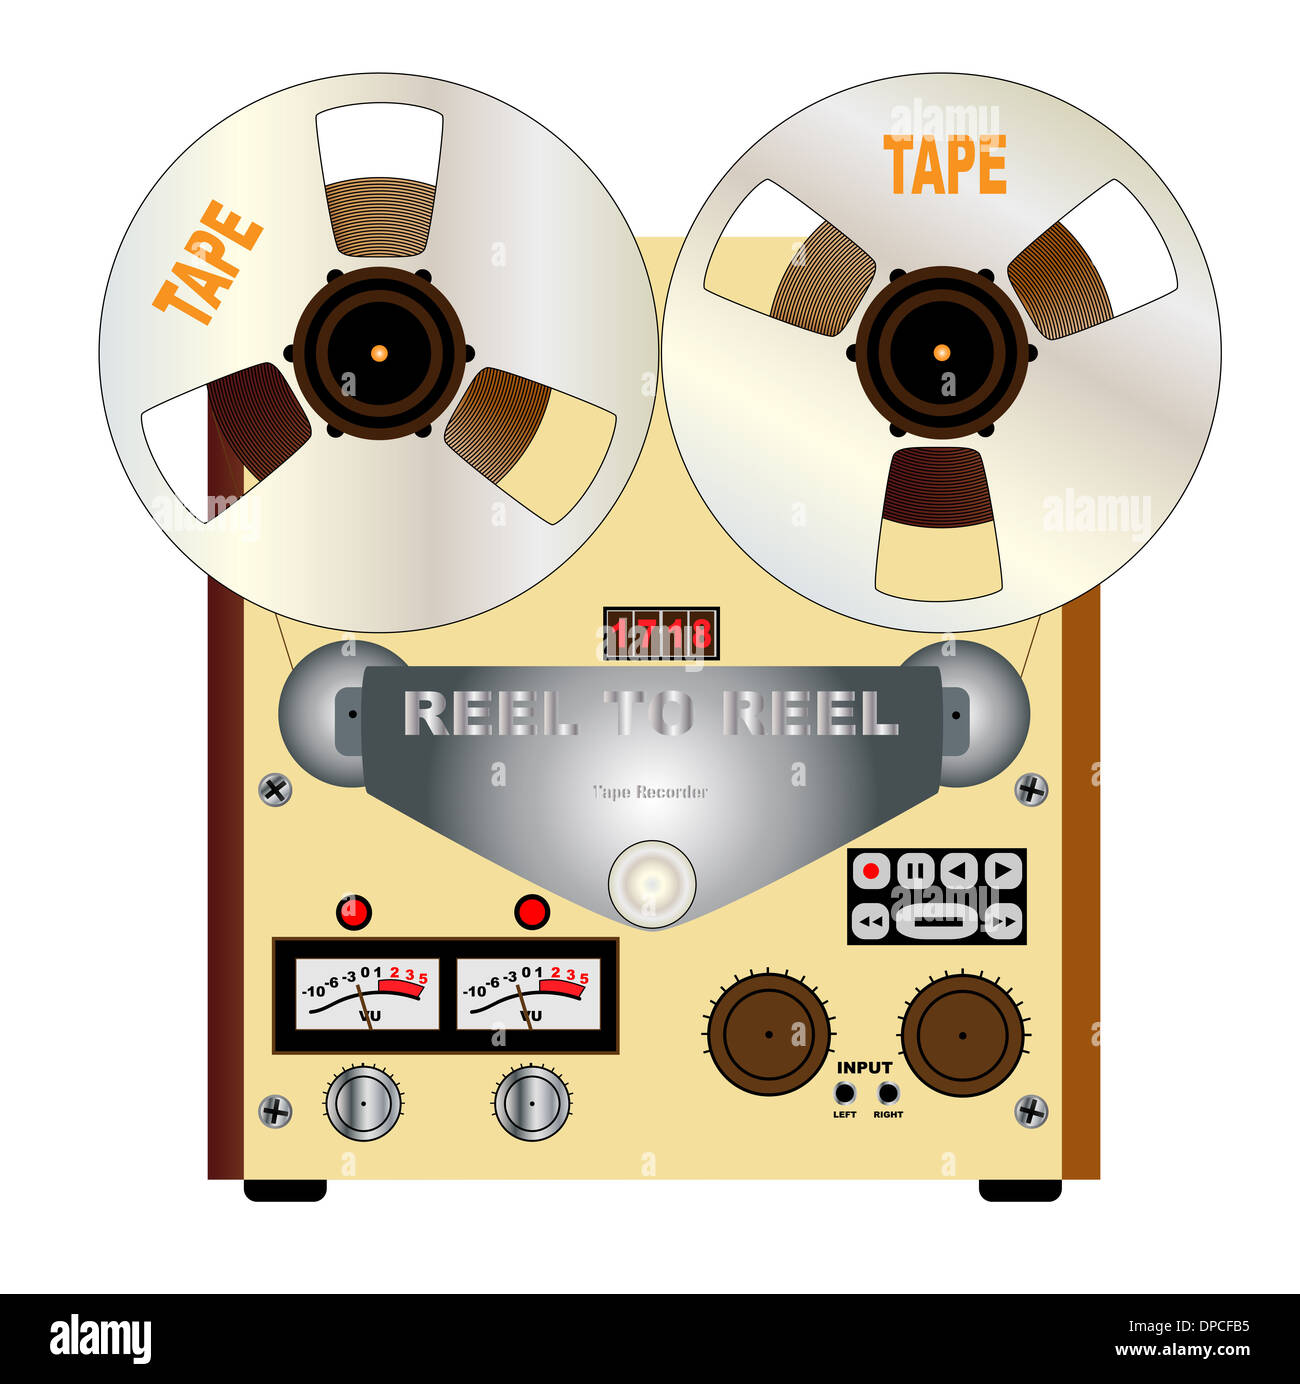 Ein typisches Reel-to-Reel Viertel Zoll Stereo-master Tonbandgerät. Stockfoto